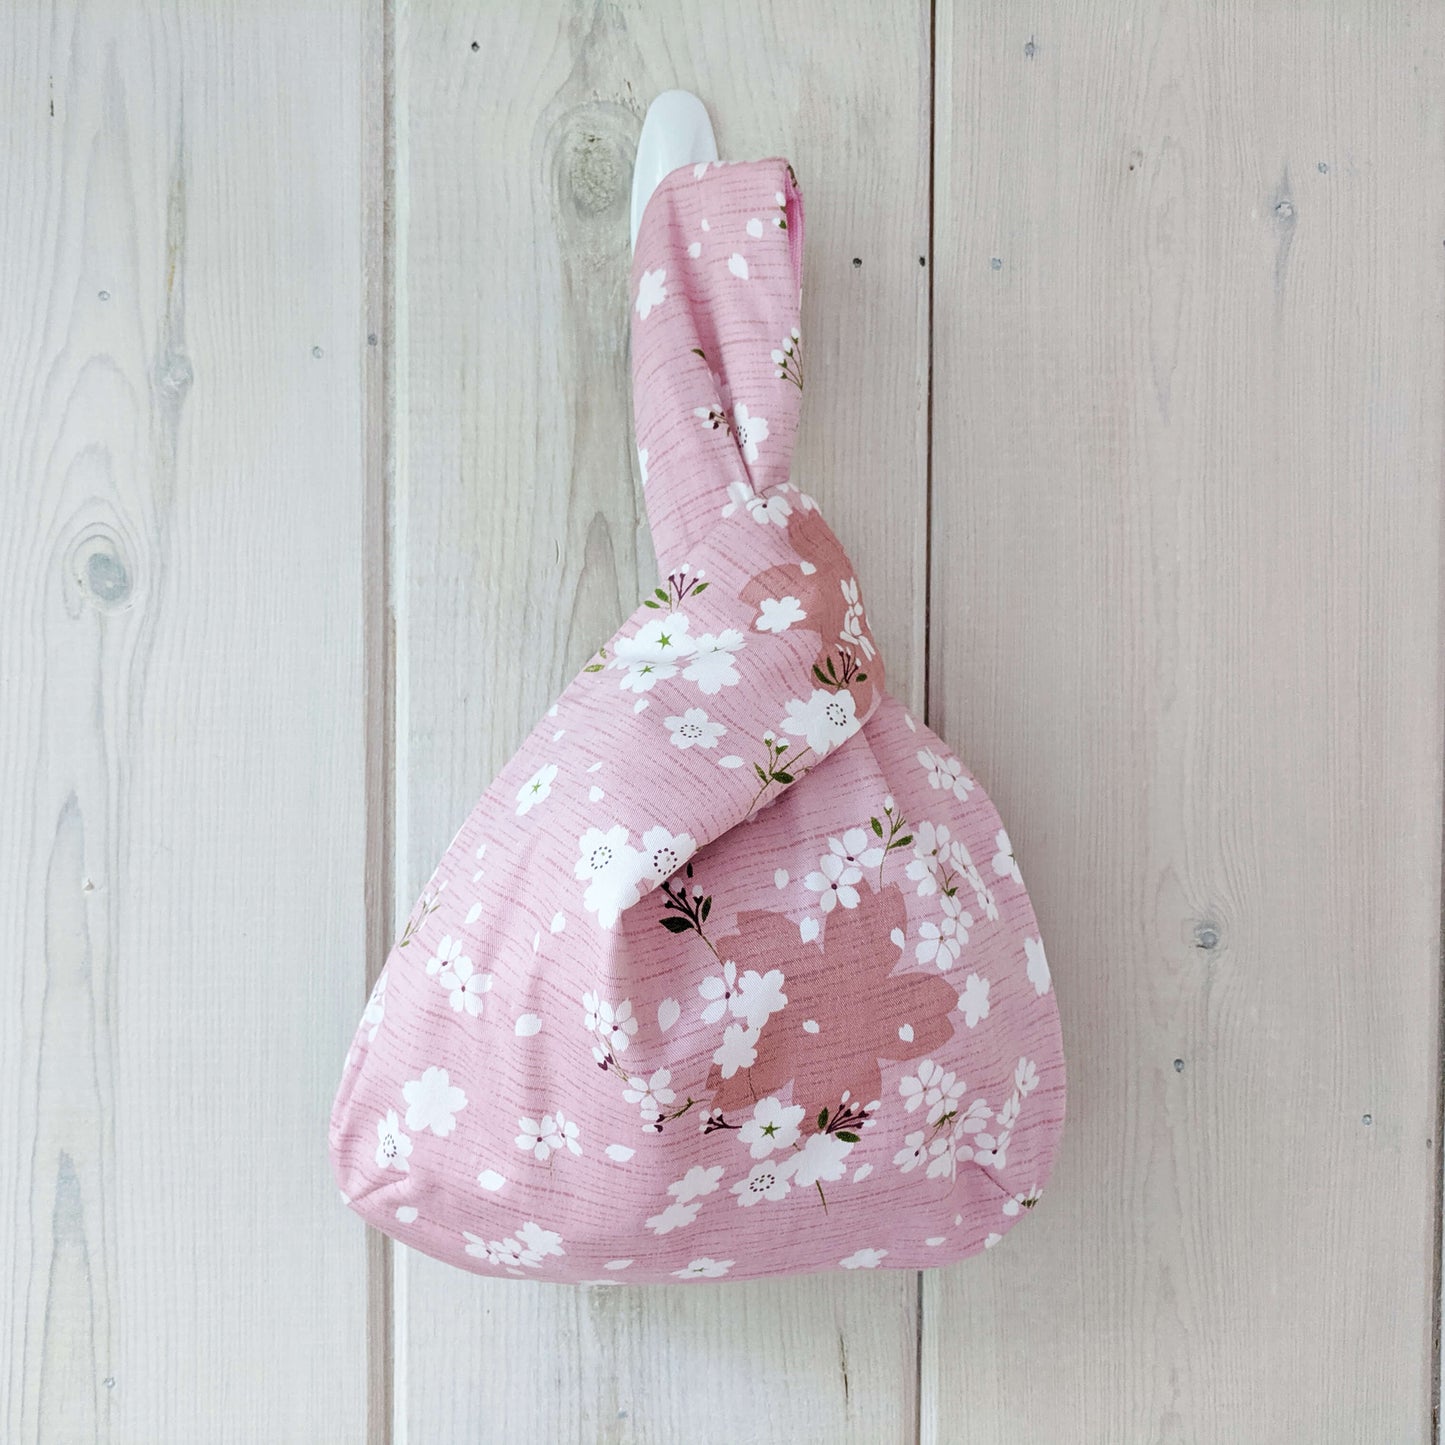 Knot Bag Wristlet - Sweet Cherry Blossoms Pink